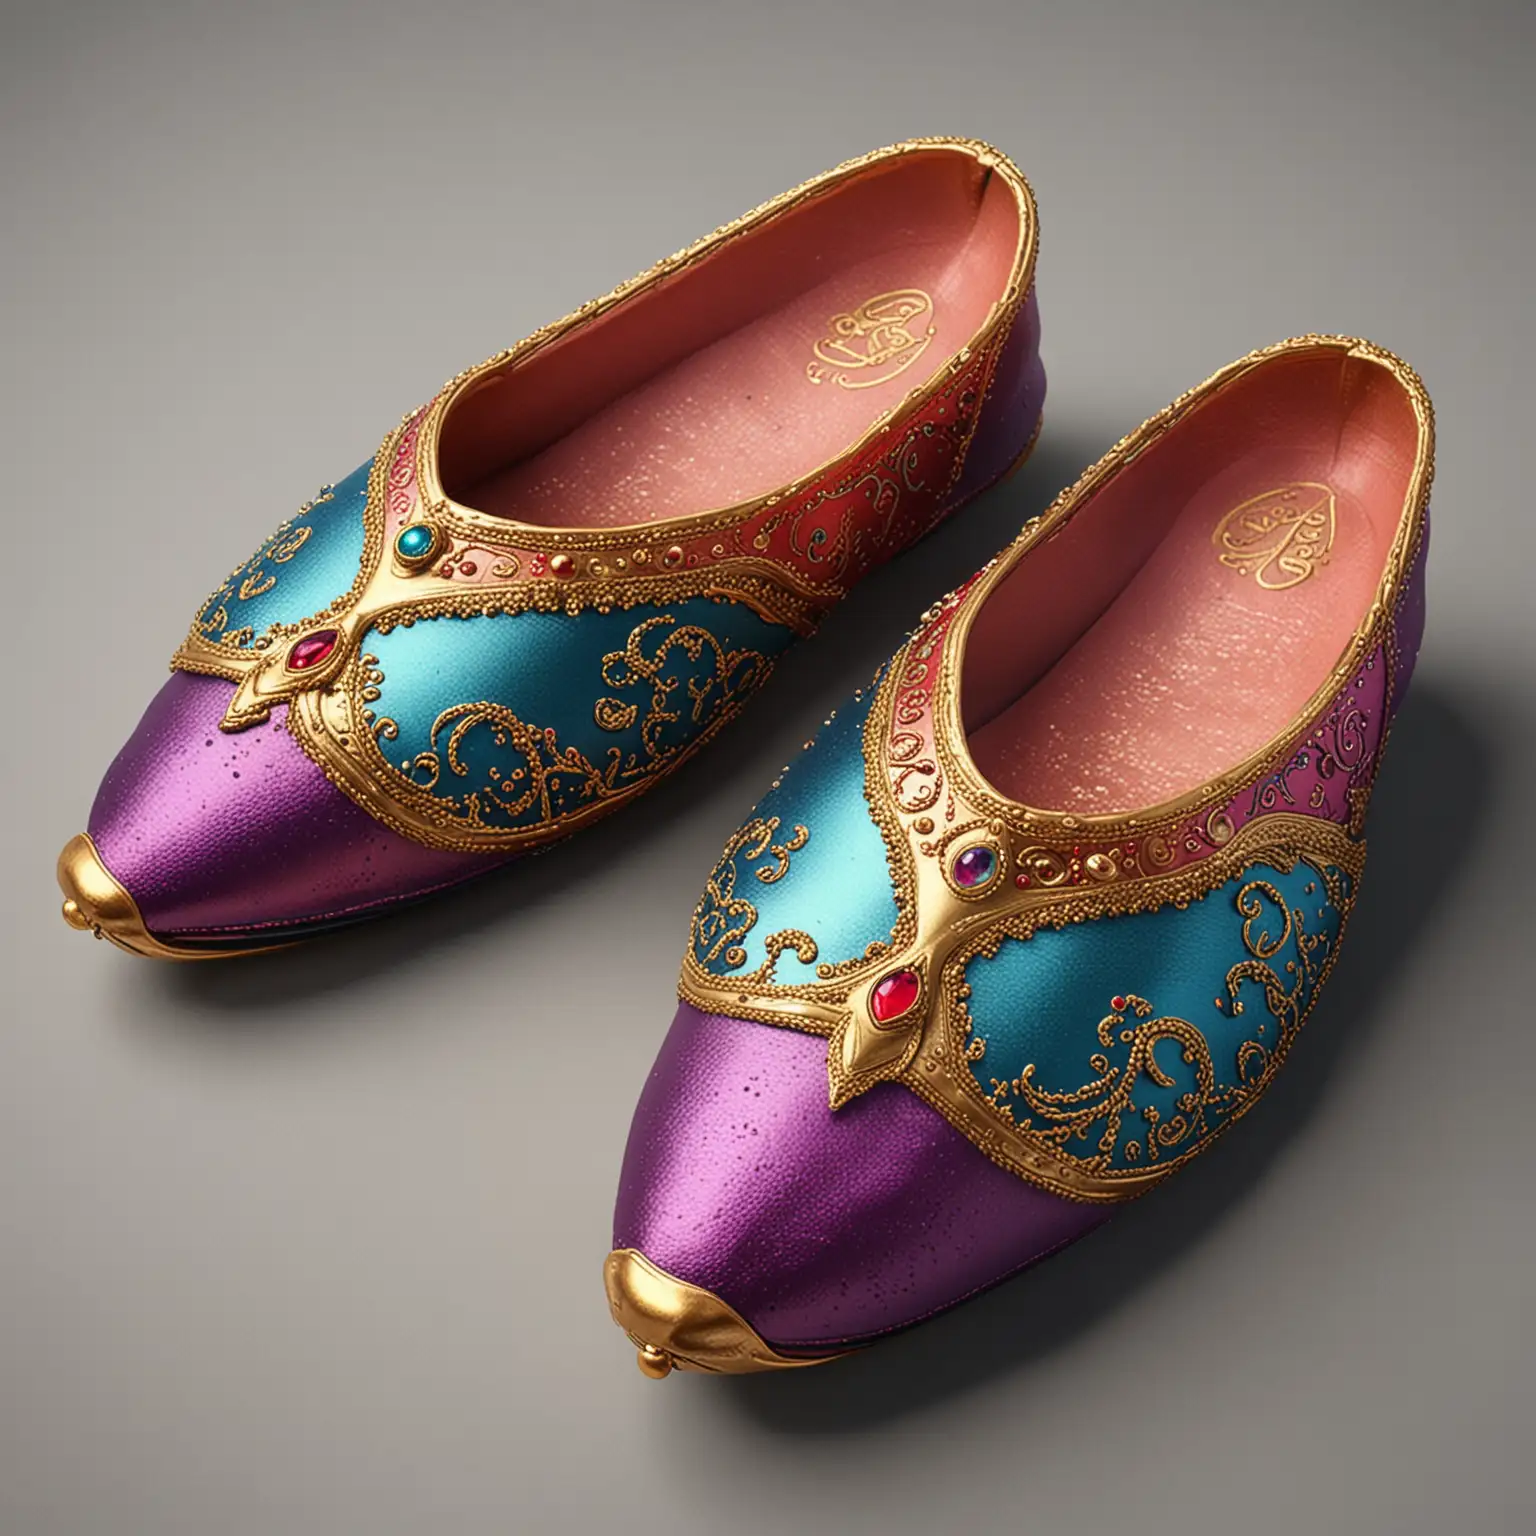 Realistic Aladdins Slippers in Multicolored Magical Design